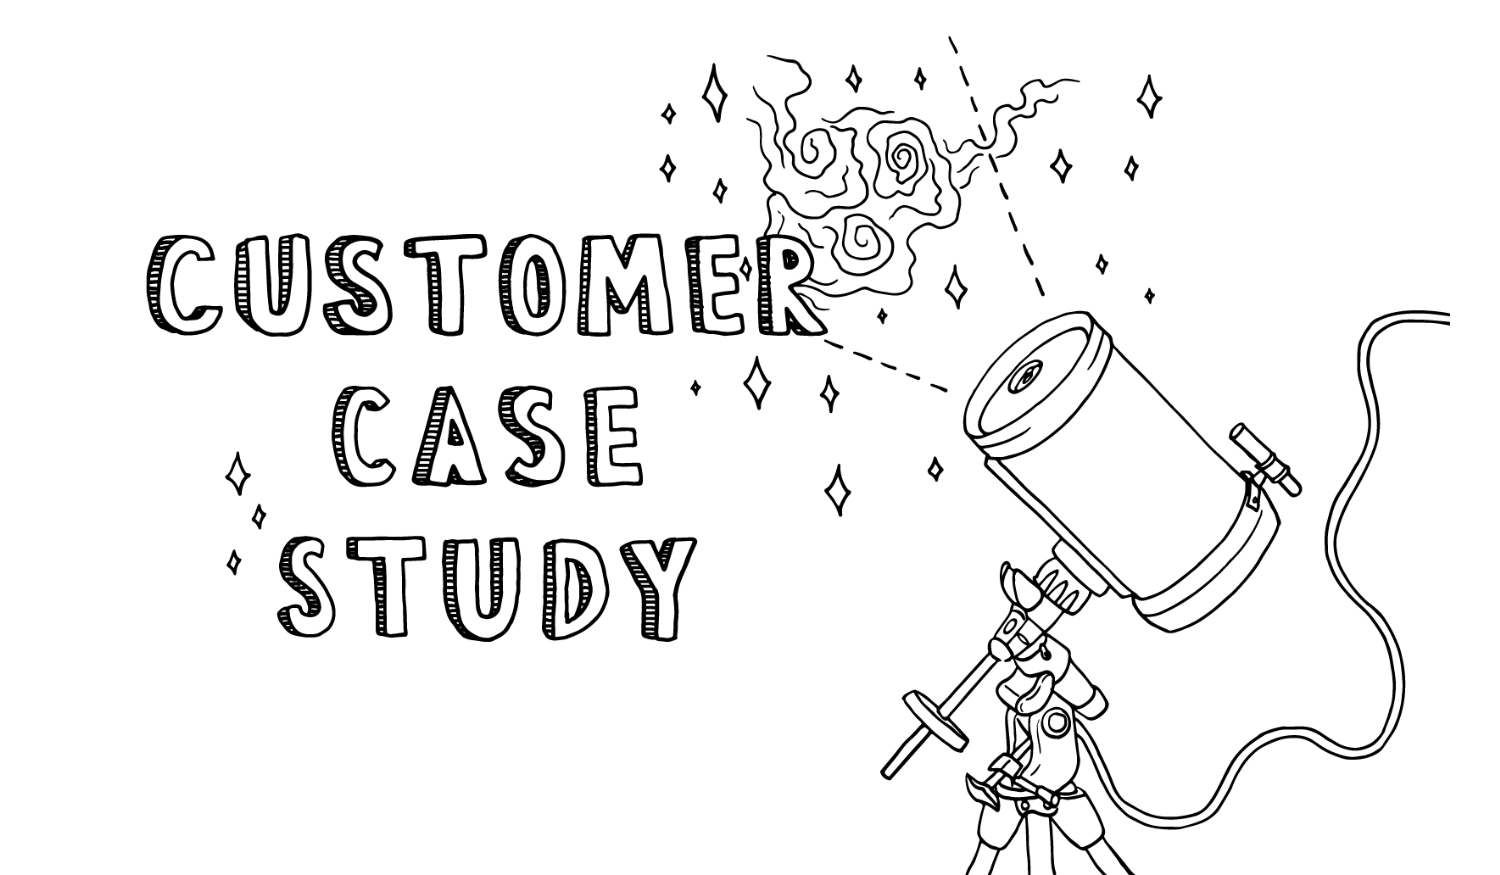 Customer Case Study: The Astronomer